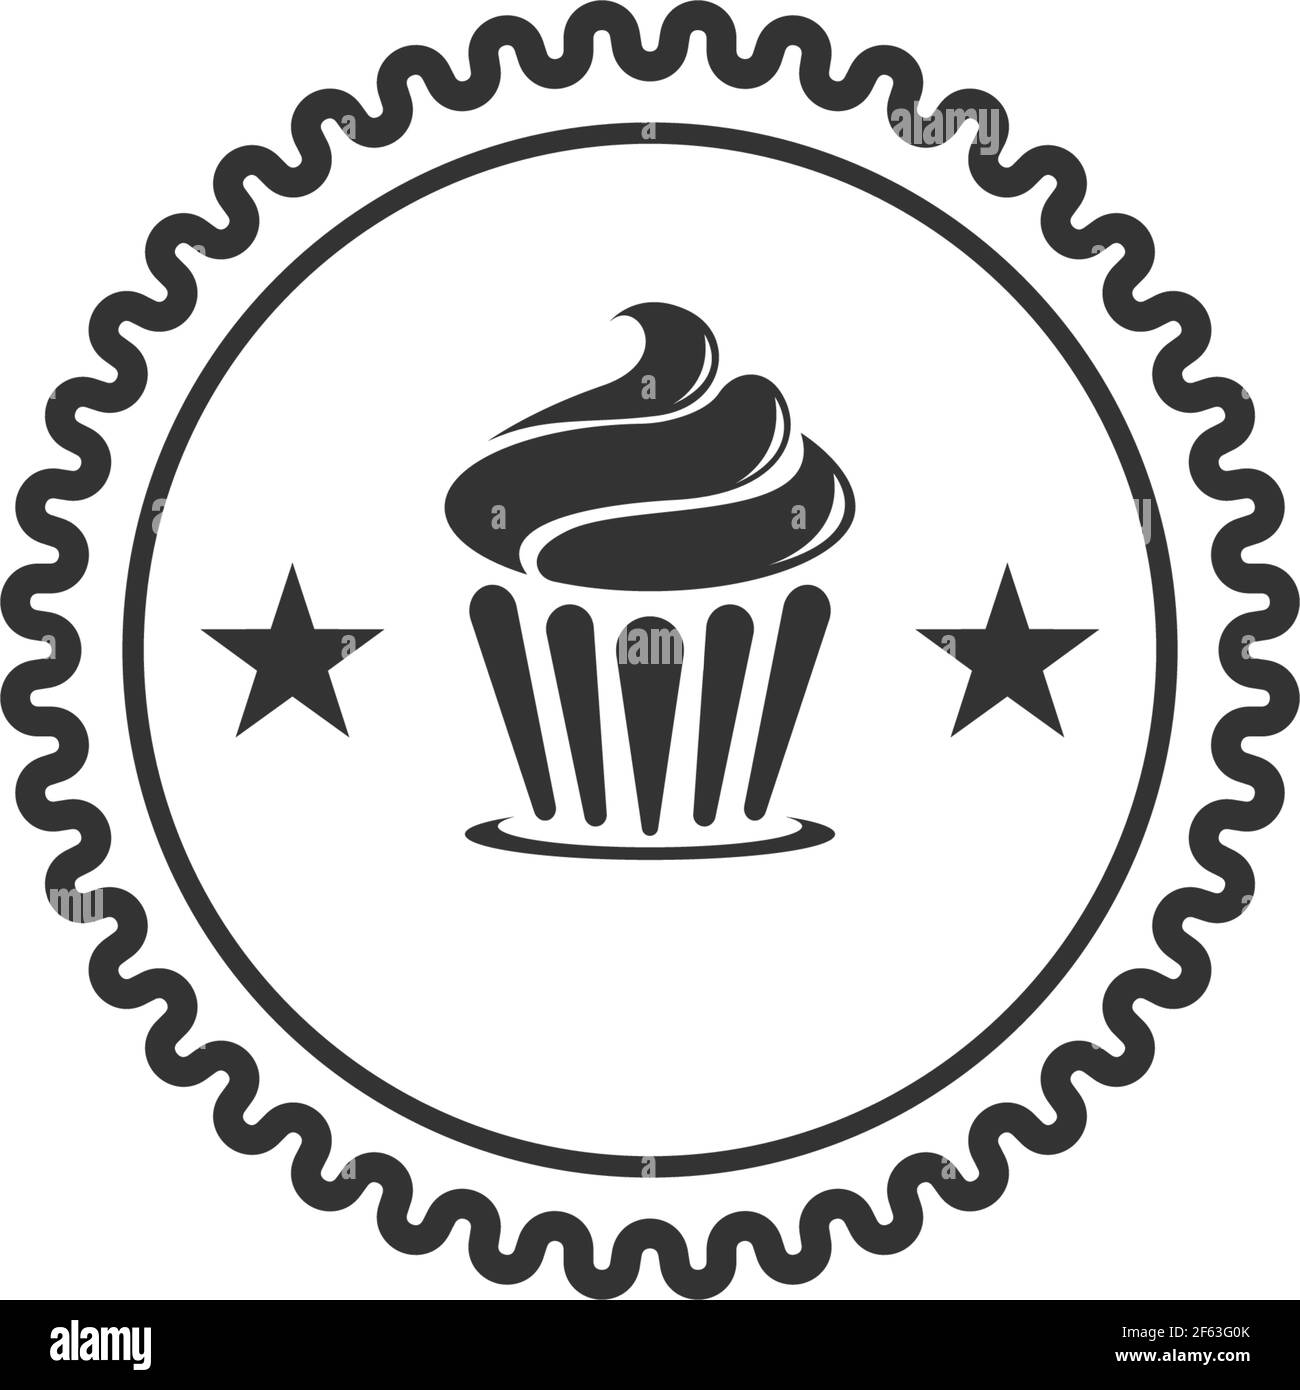 Cake Logo Black And White Stock Photos Images Alamy